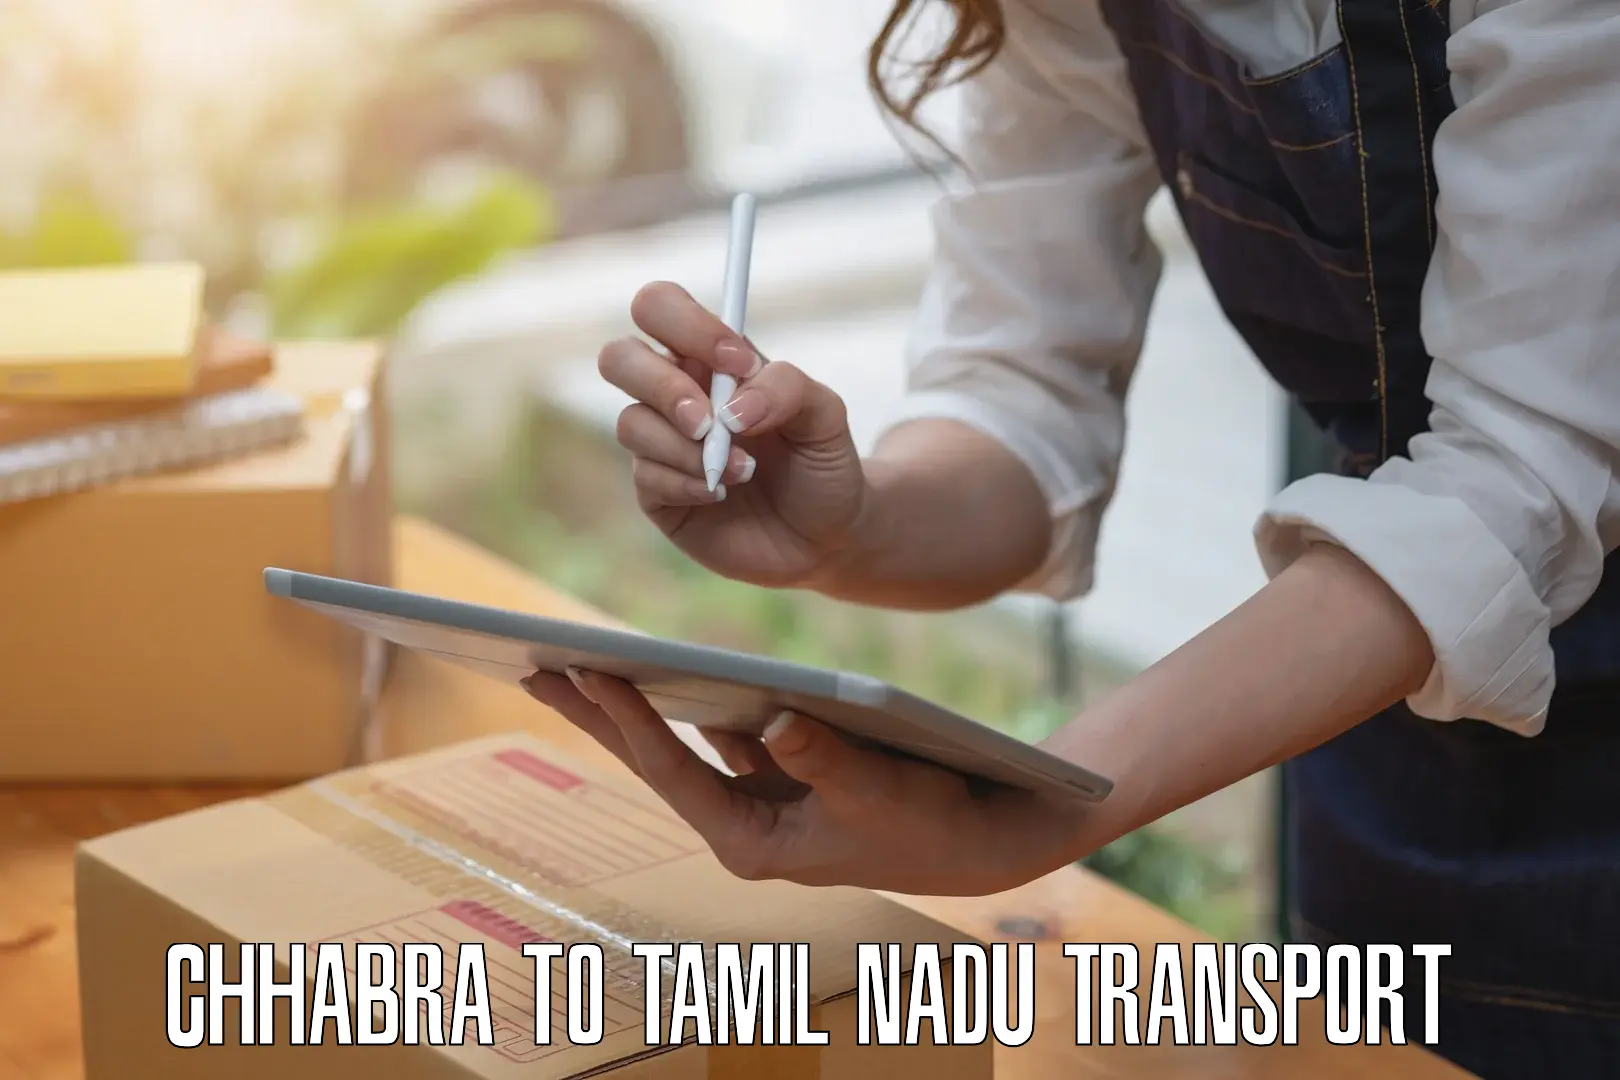 Daily transport service Chhabra to Tamil Nadu